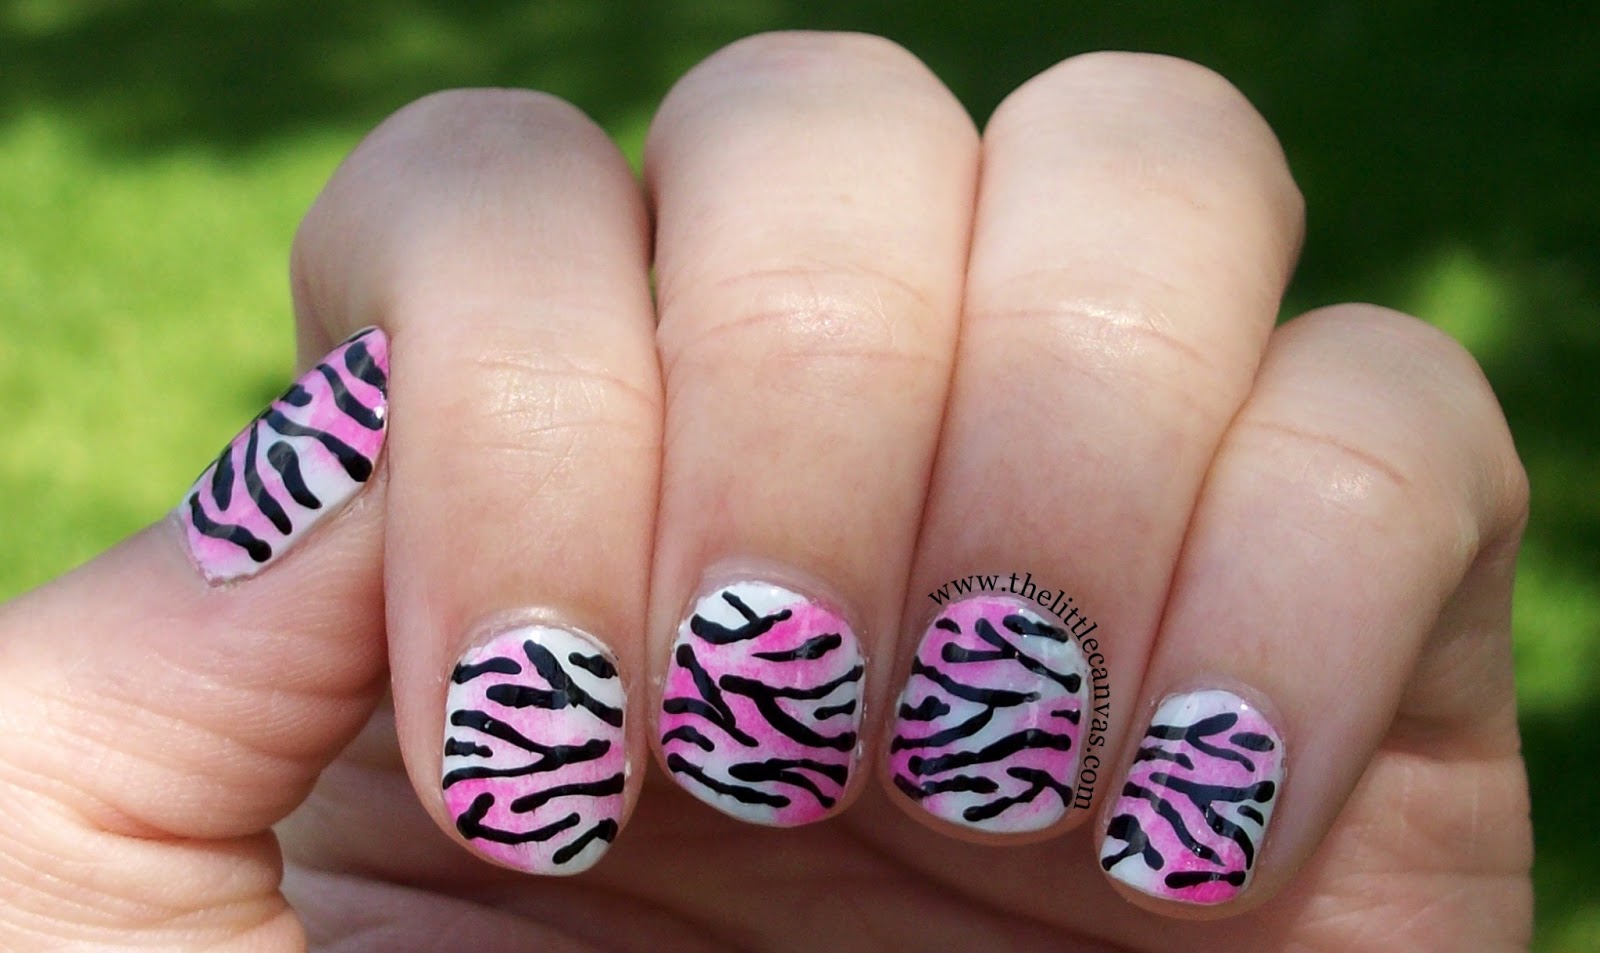 3. Zebra Stripe Nail Art - wide 7